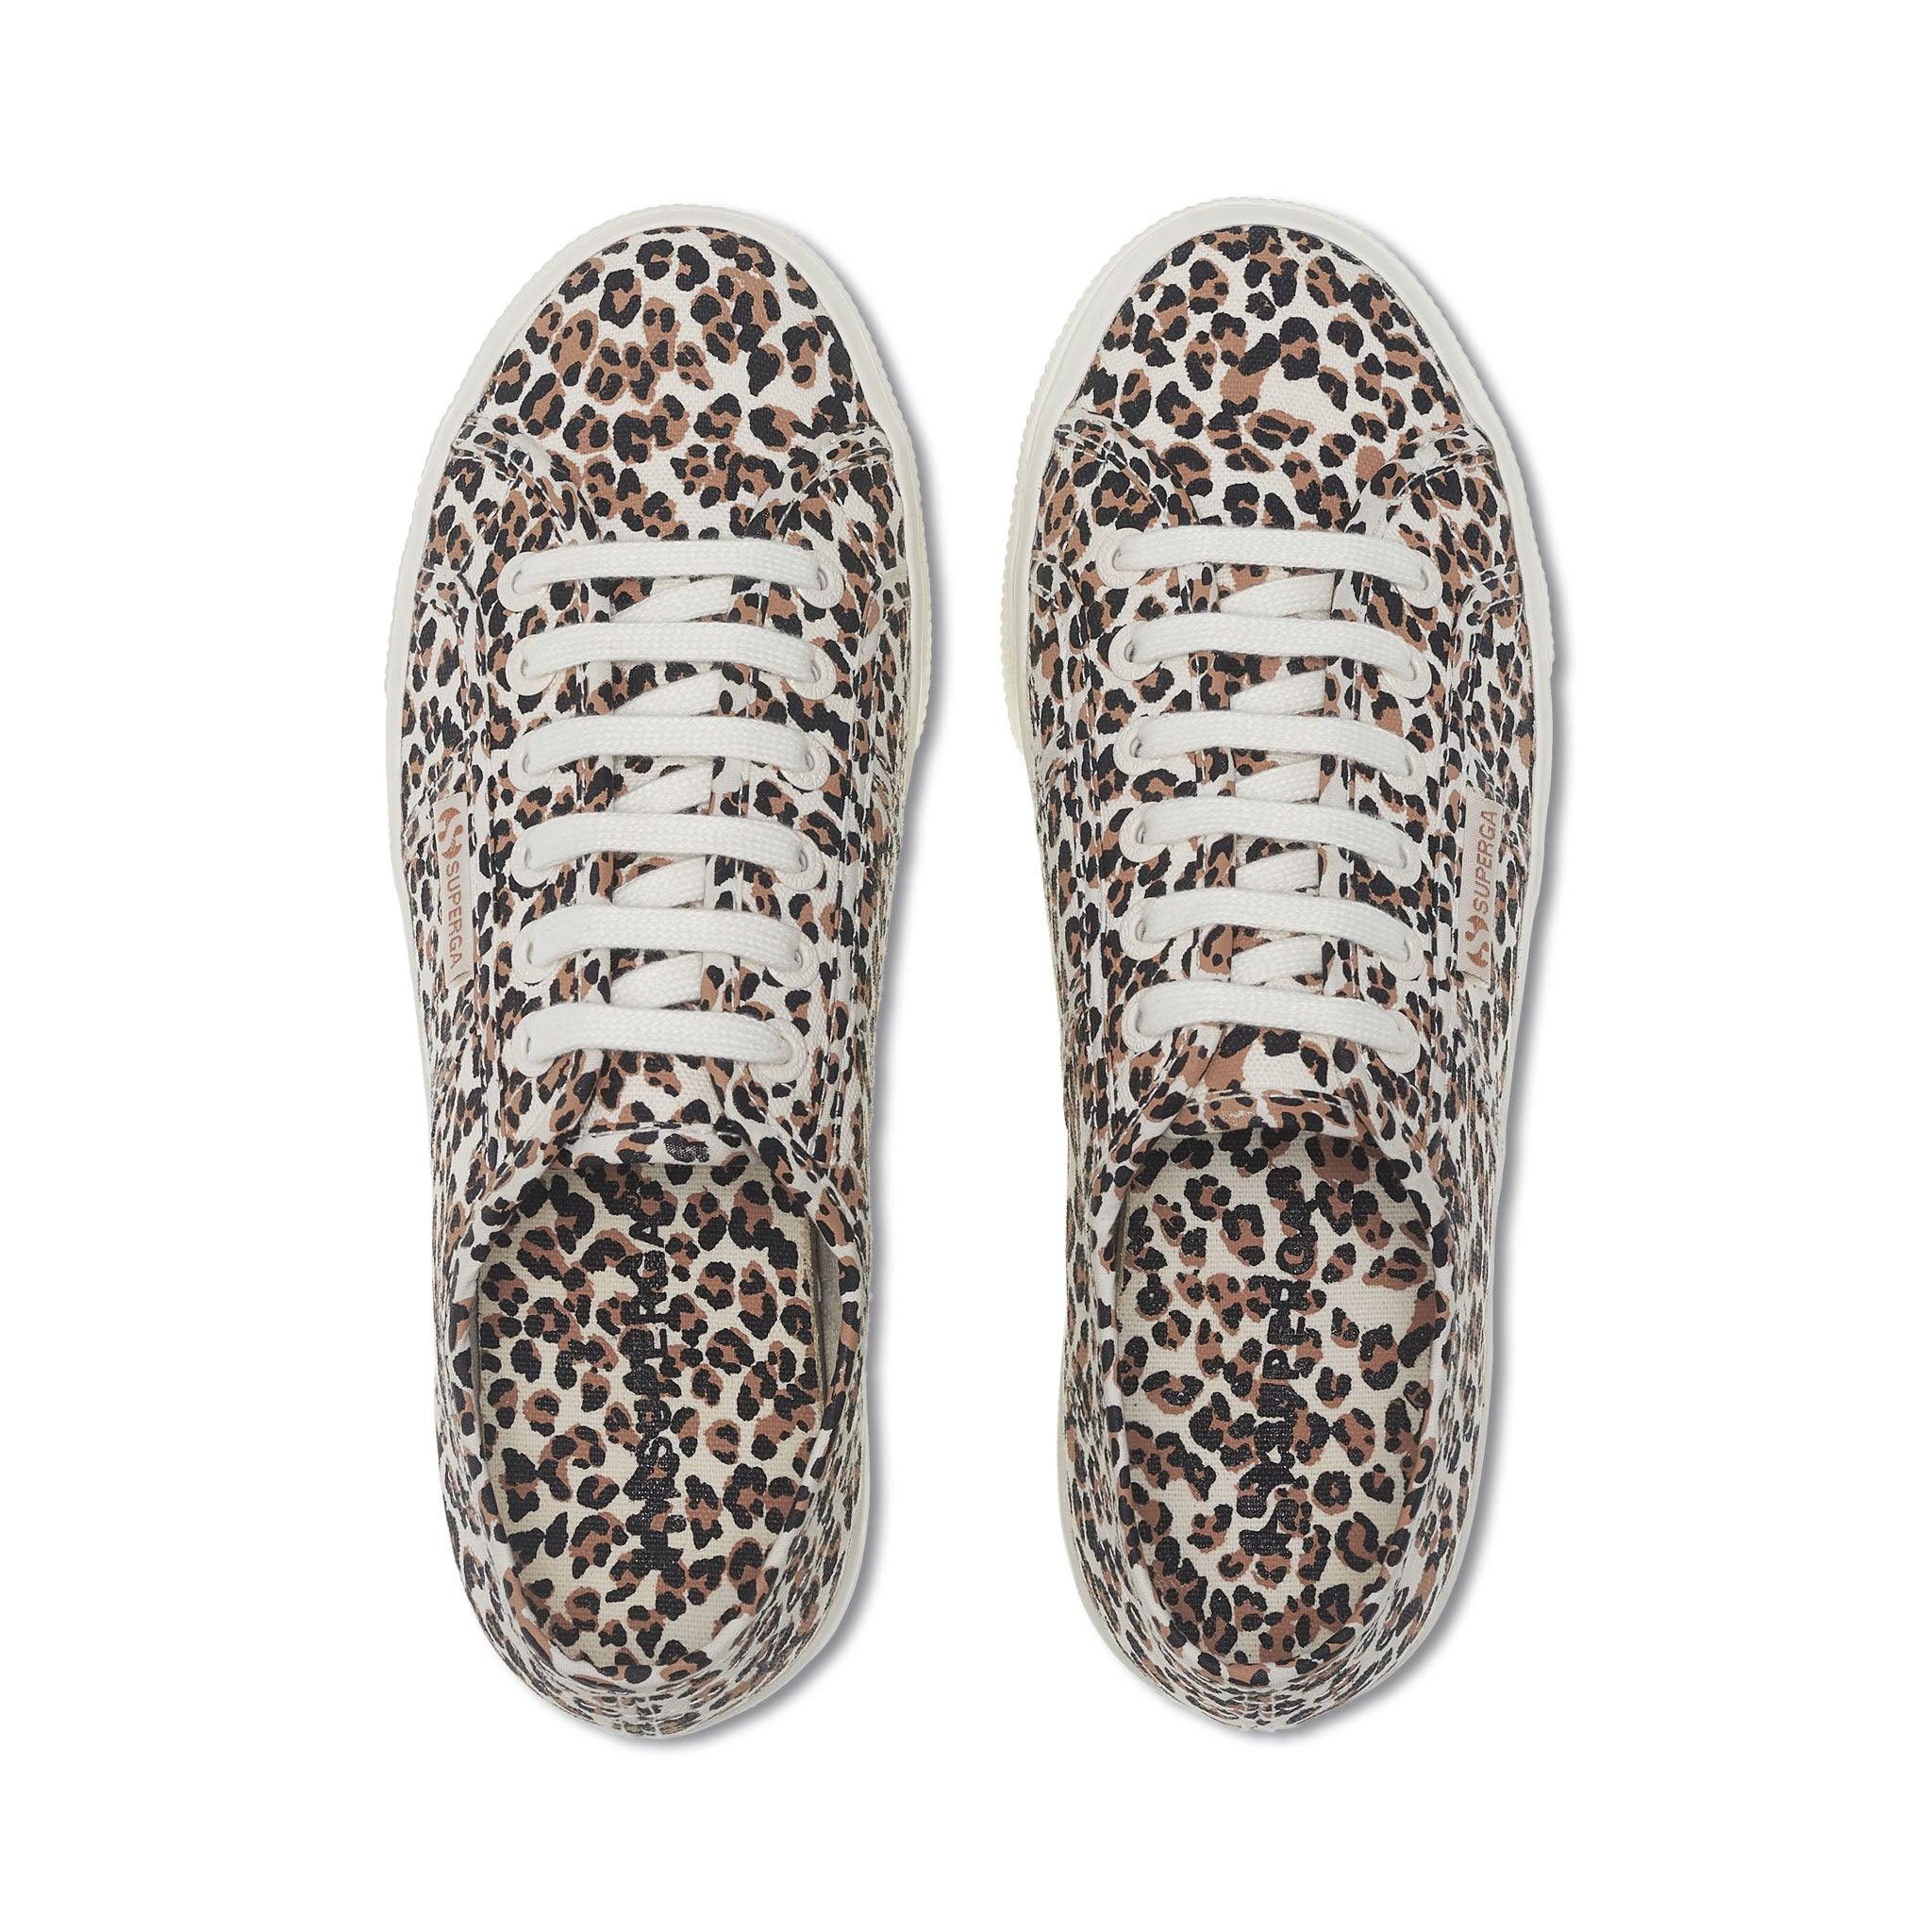 New Balance X J.Crew 996 Leopard Sneakers - The House of Sequins | Girls  sneakers, Leopard sneakers, Sneakers fashion